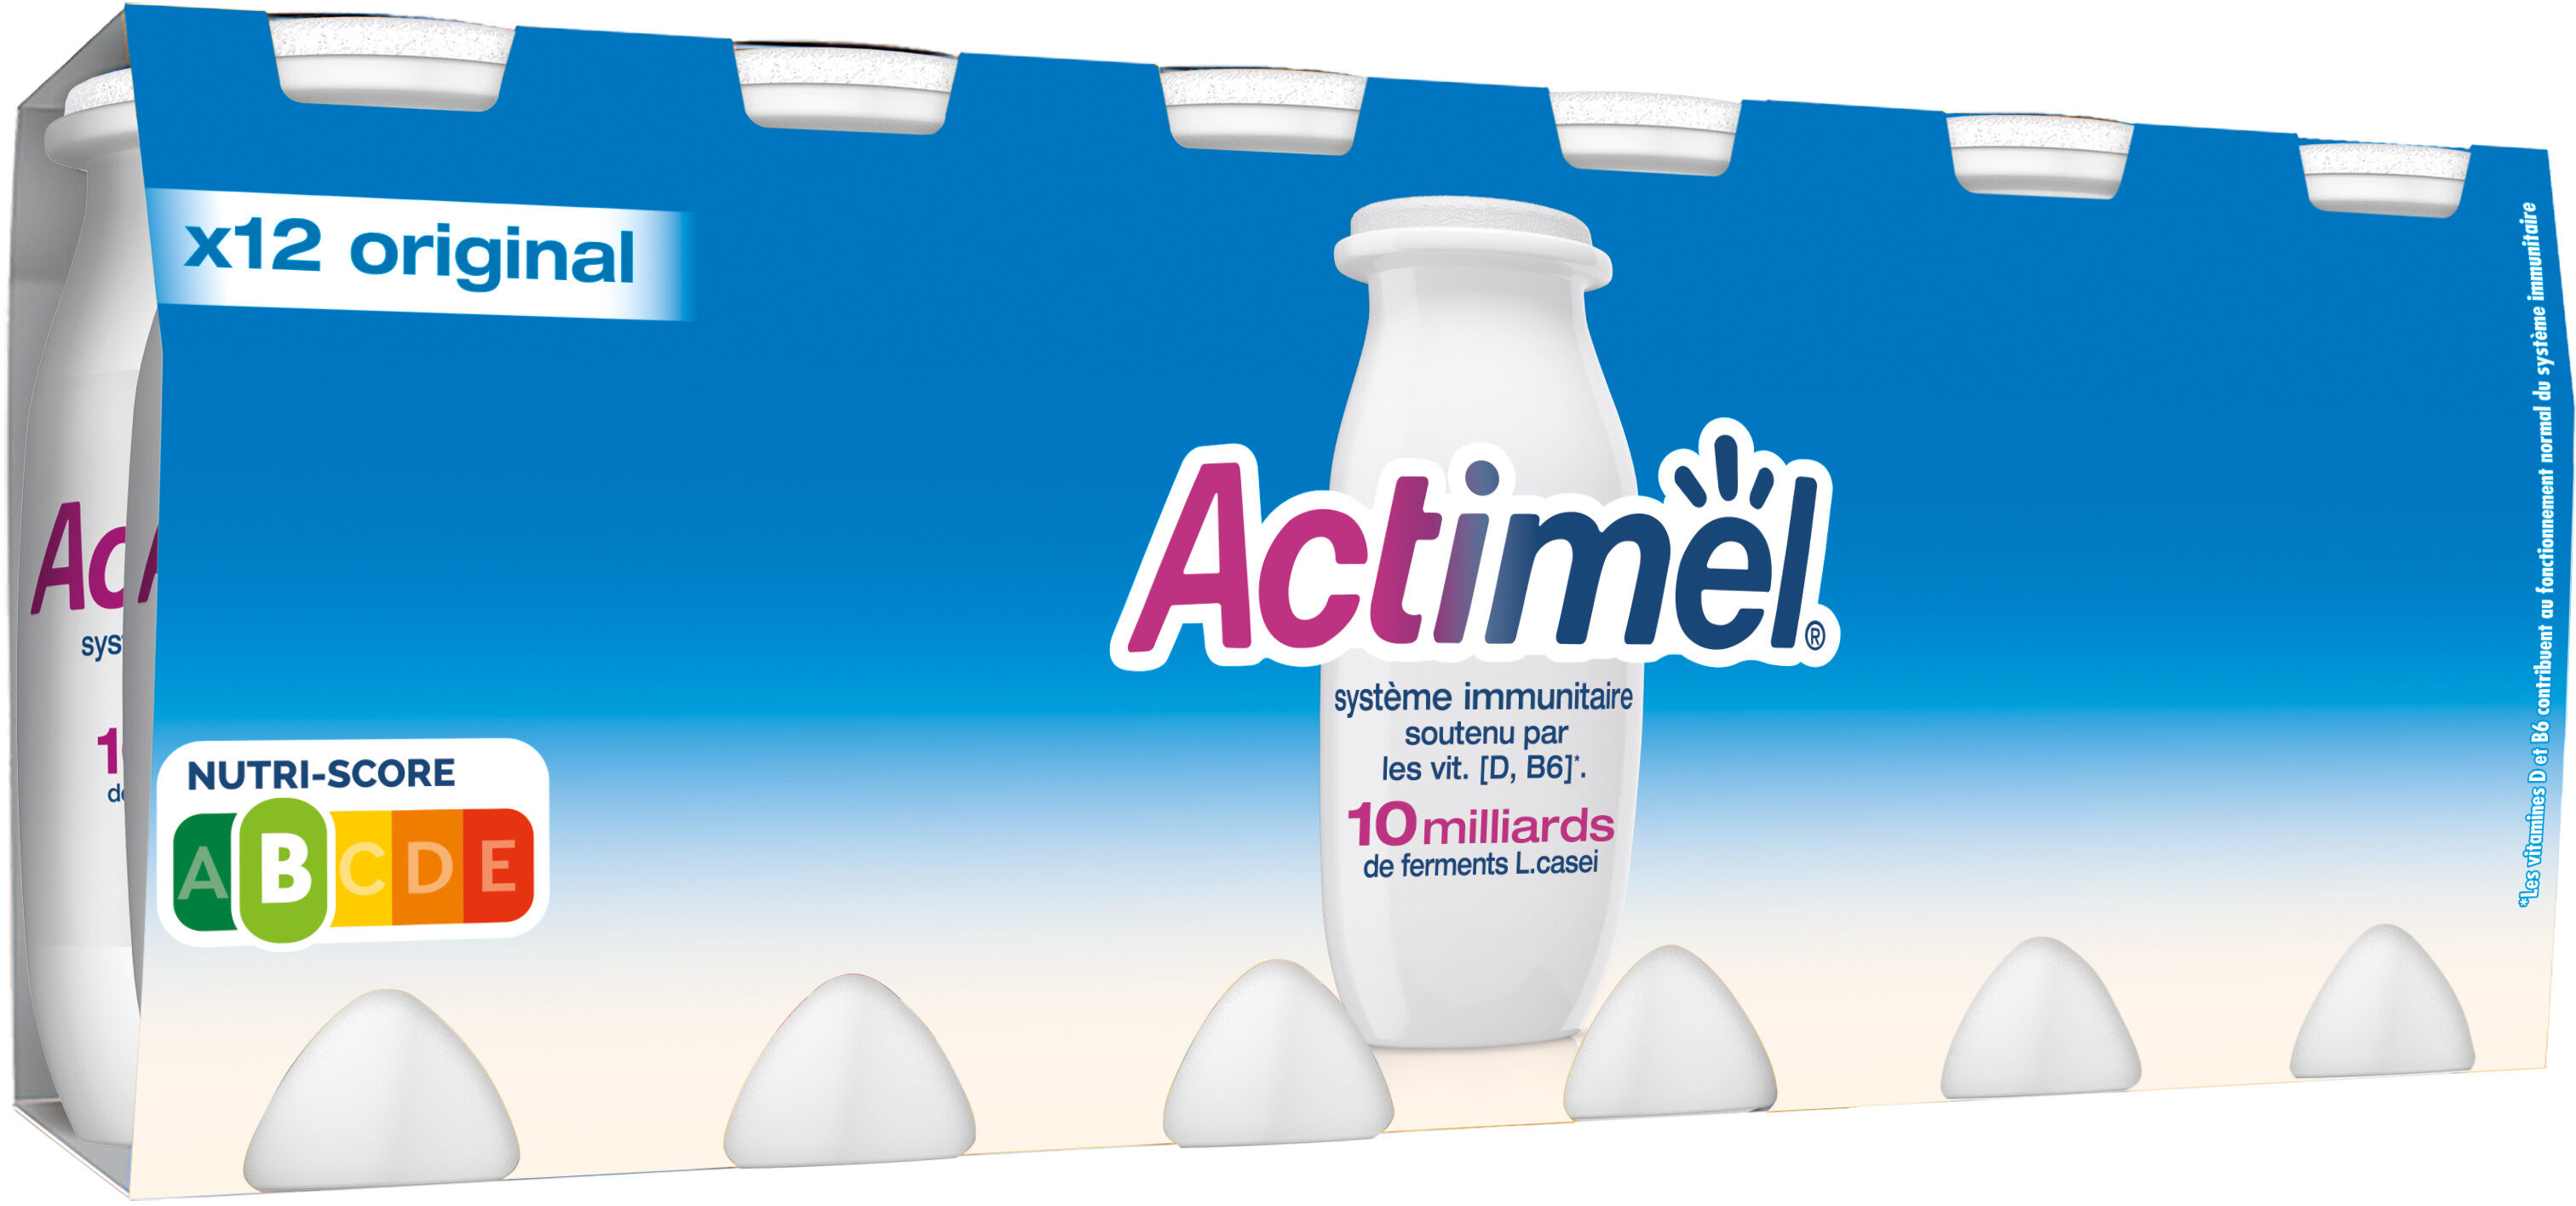 Actimel 100 g x 12 original - Produit